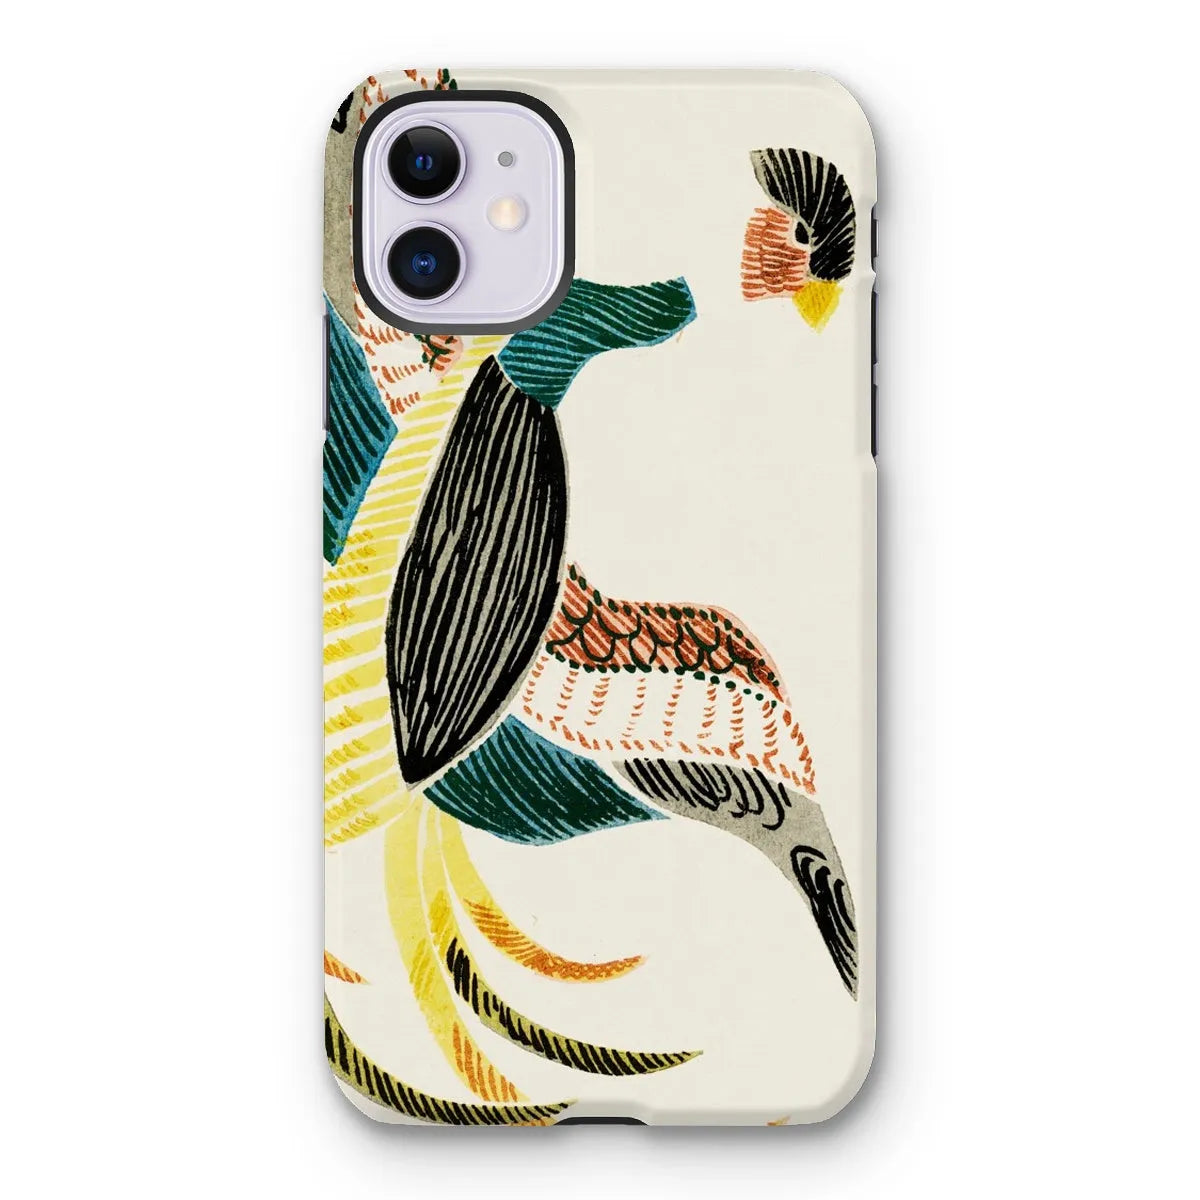 Woodblock Crane - Japanese Bird Phone Case - Taguchi Tomoki - Iphone 11 / Matte - Mobile Phone Cases - Aesthetic Art